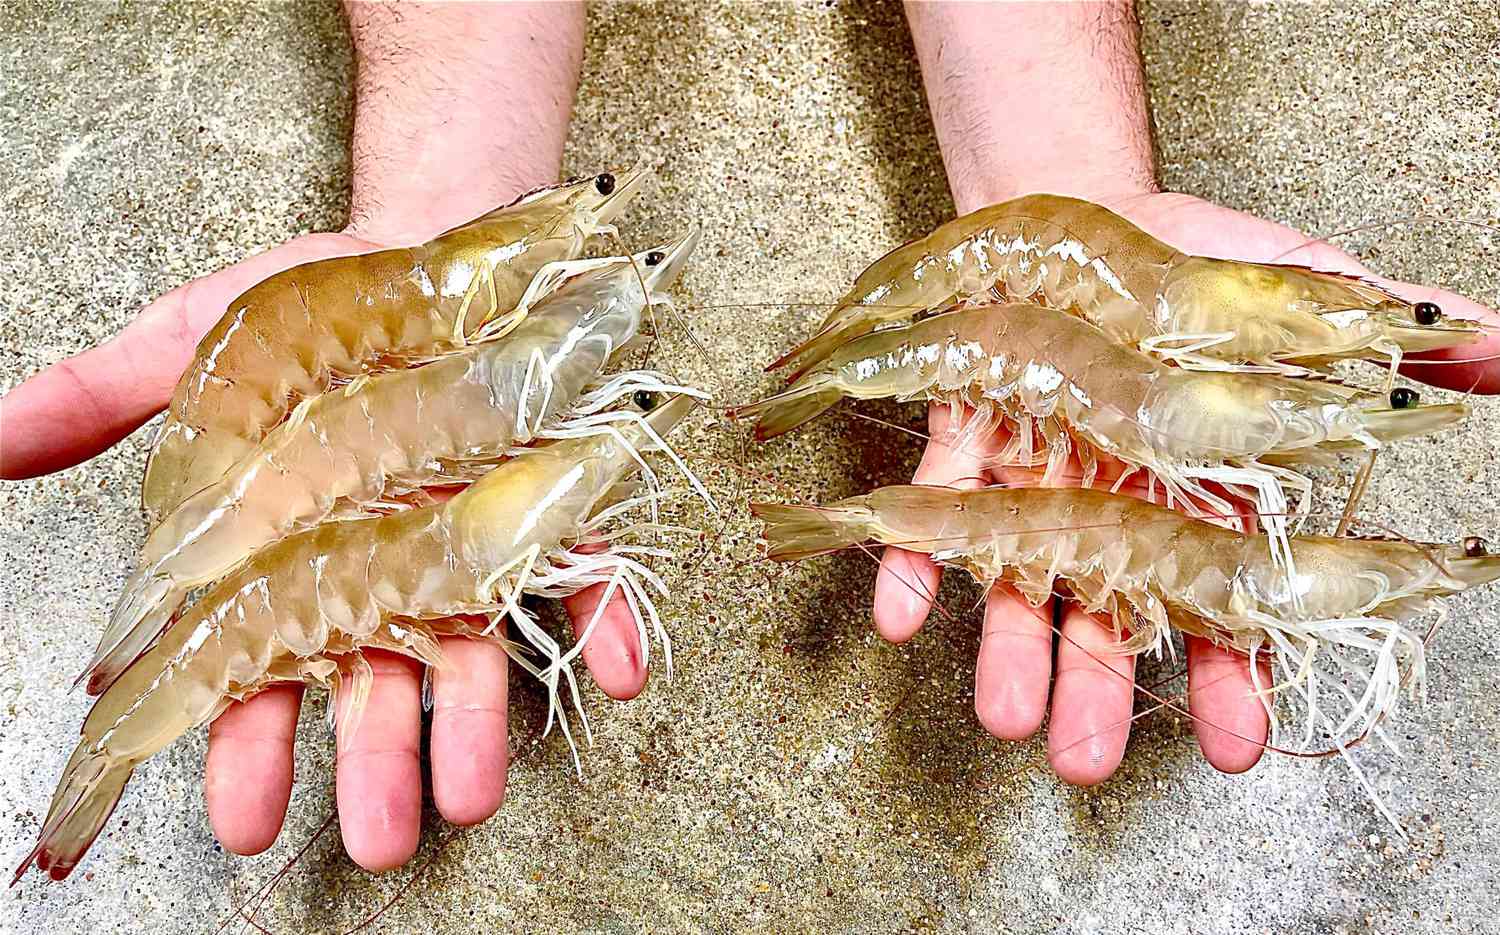 Shrimp Farming in the USA